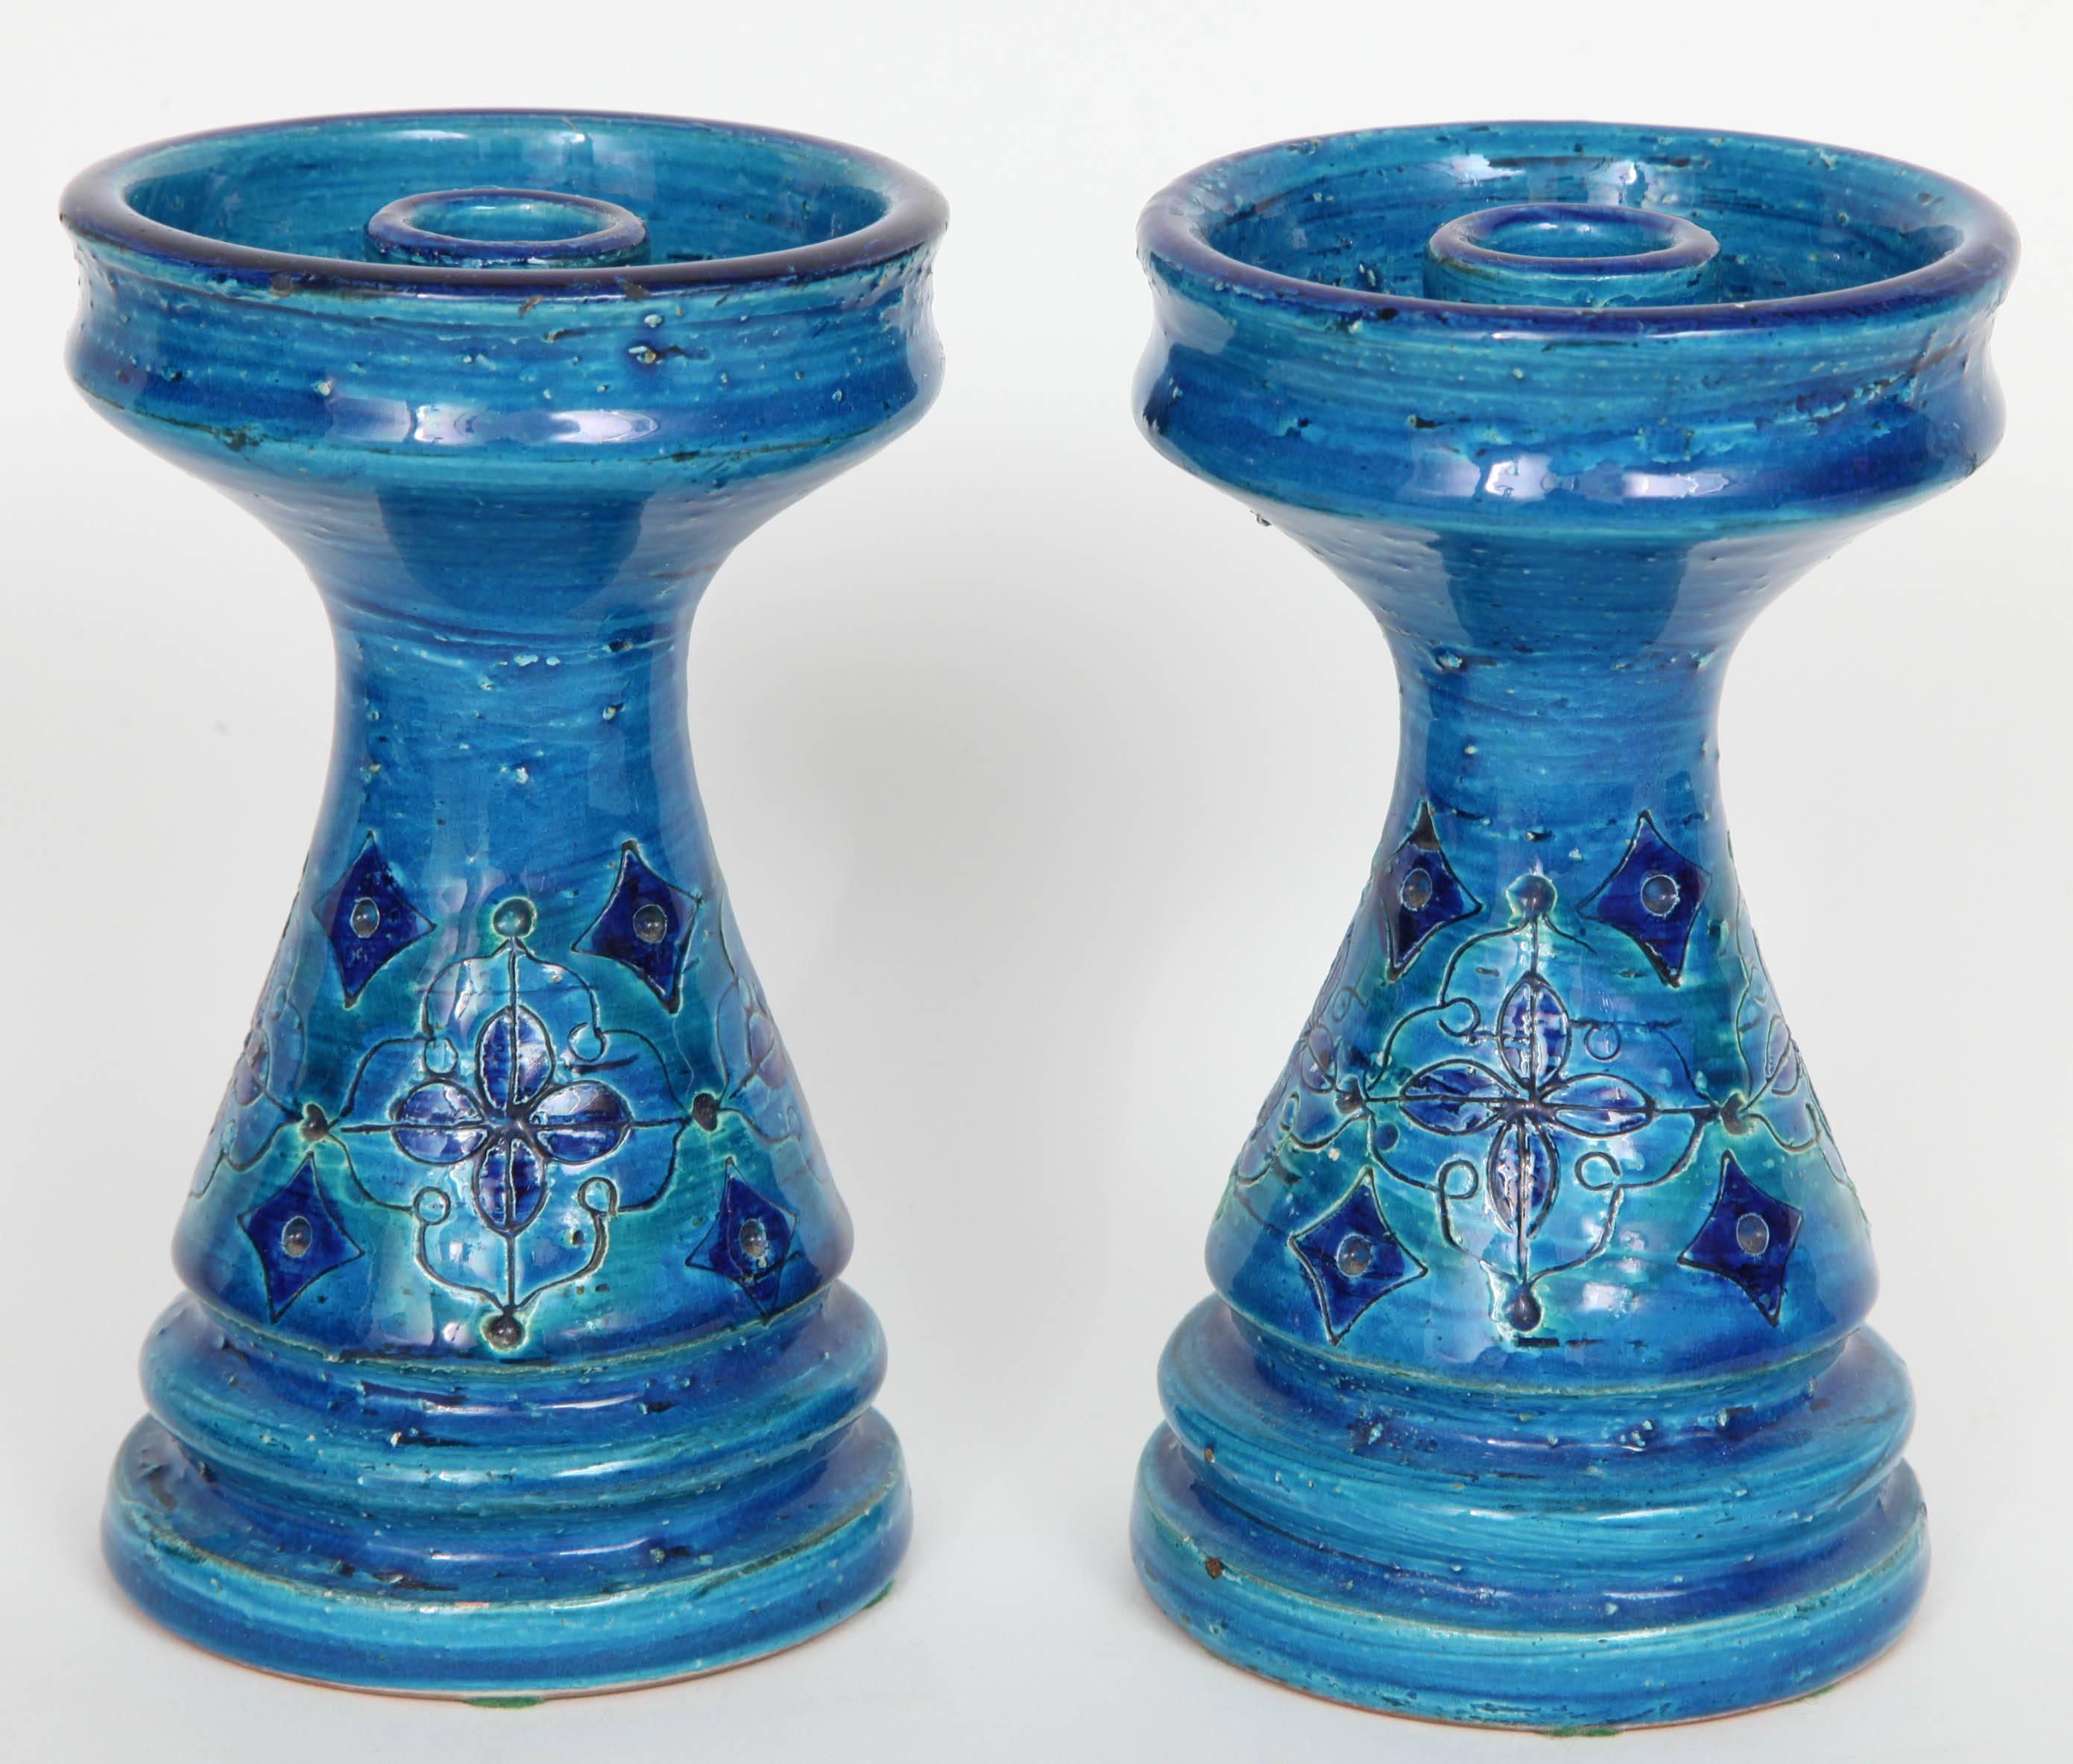 Italian Four-Piece Rimini Blue Ceramic Set by Bitossi